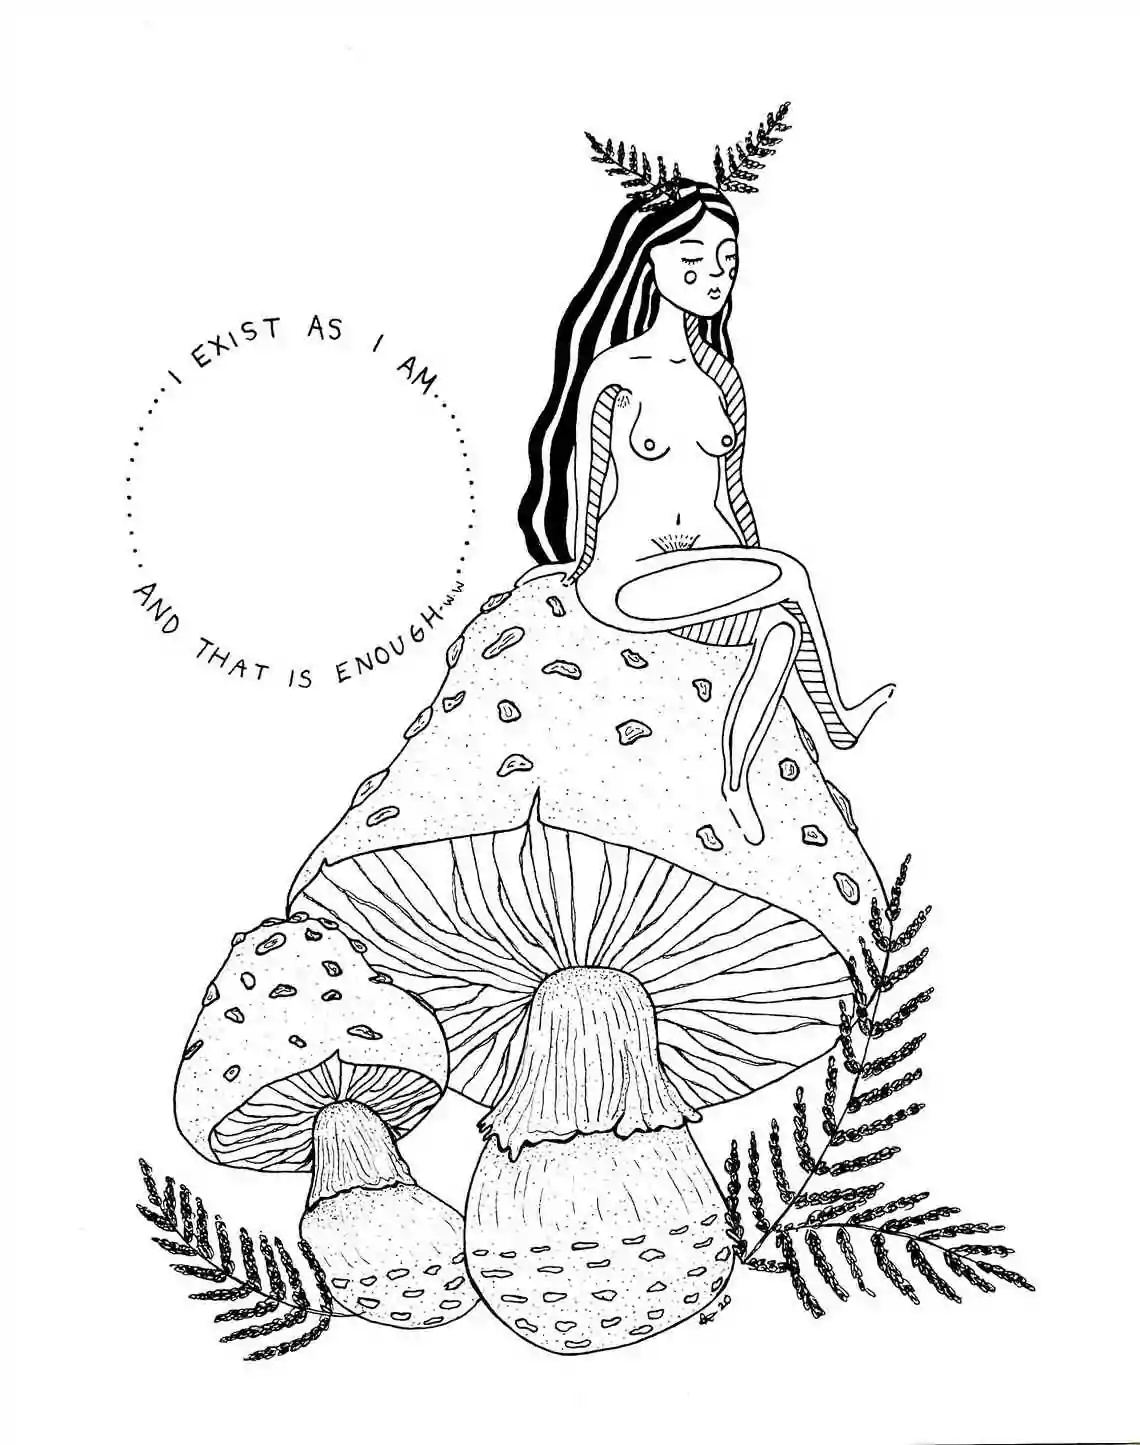 Drawing of a woman sitting on a mushroom.